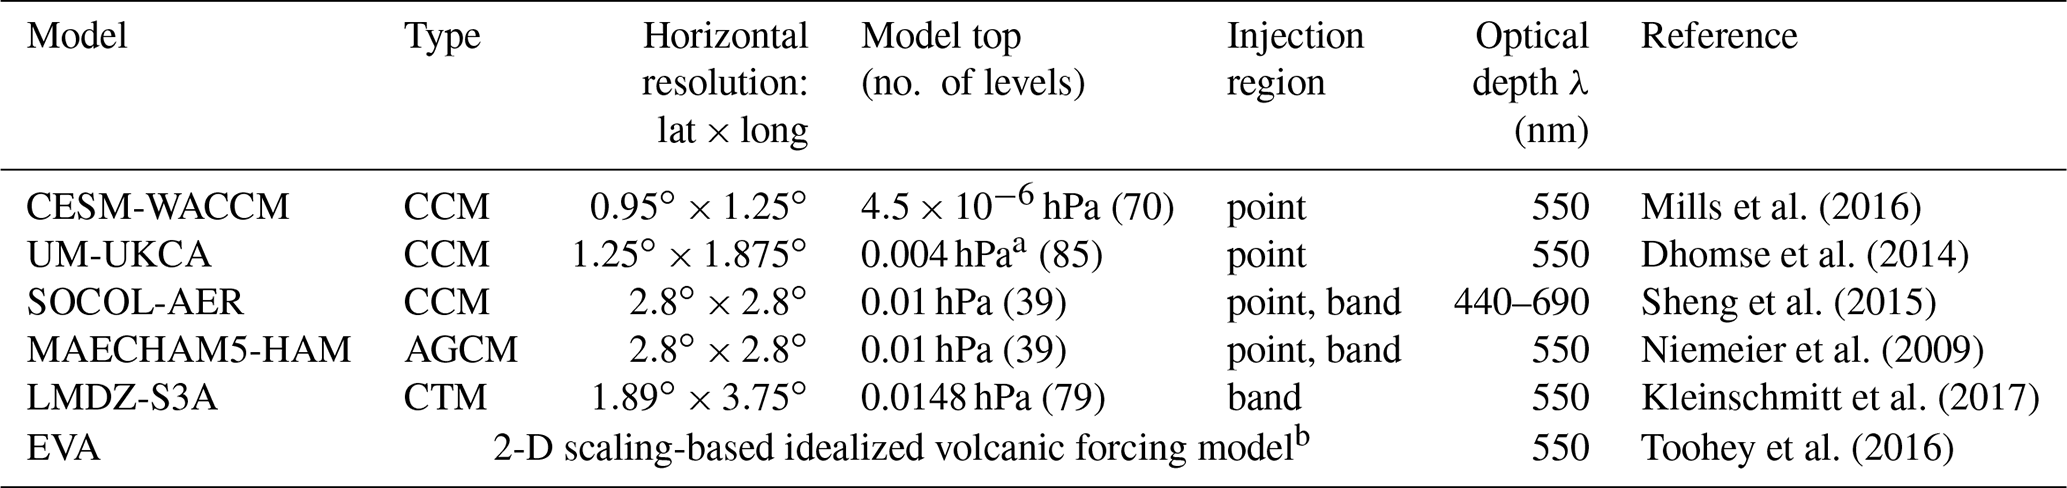 ACP - Model physics and chemistry causing intermodel disagreement